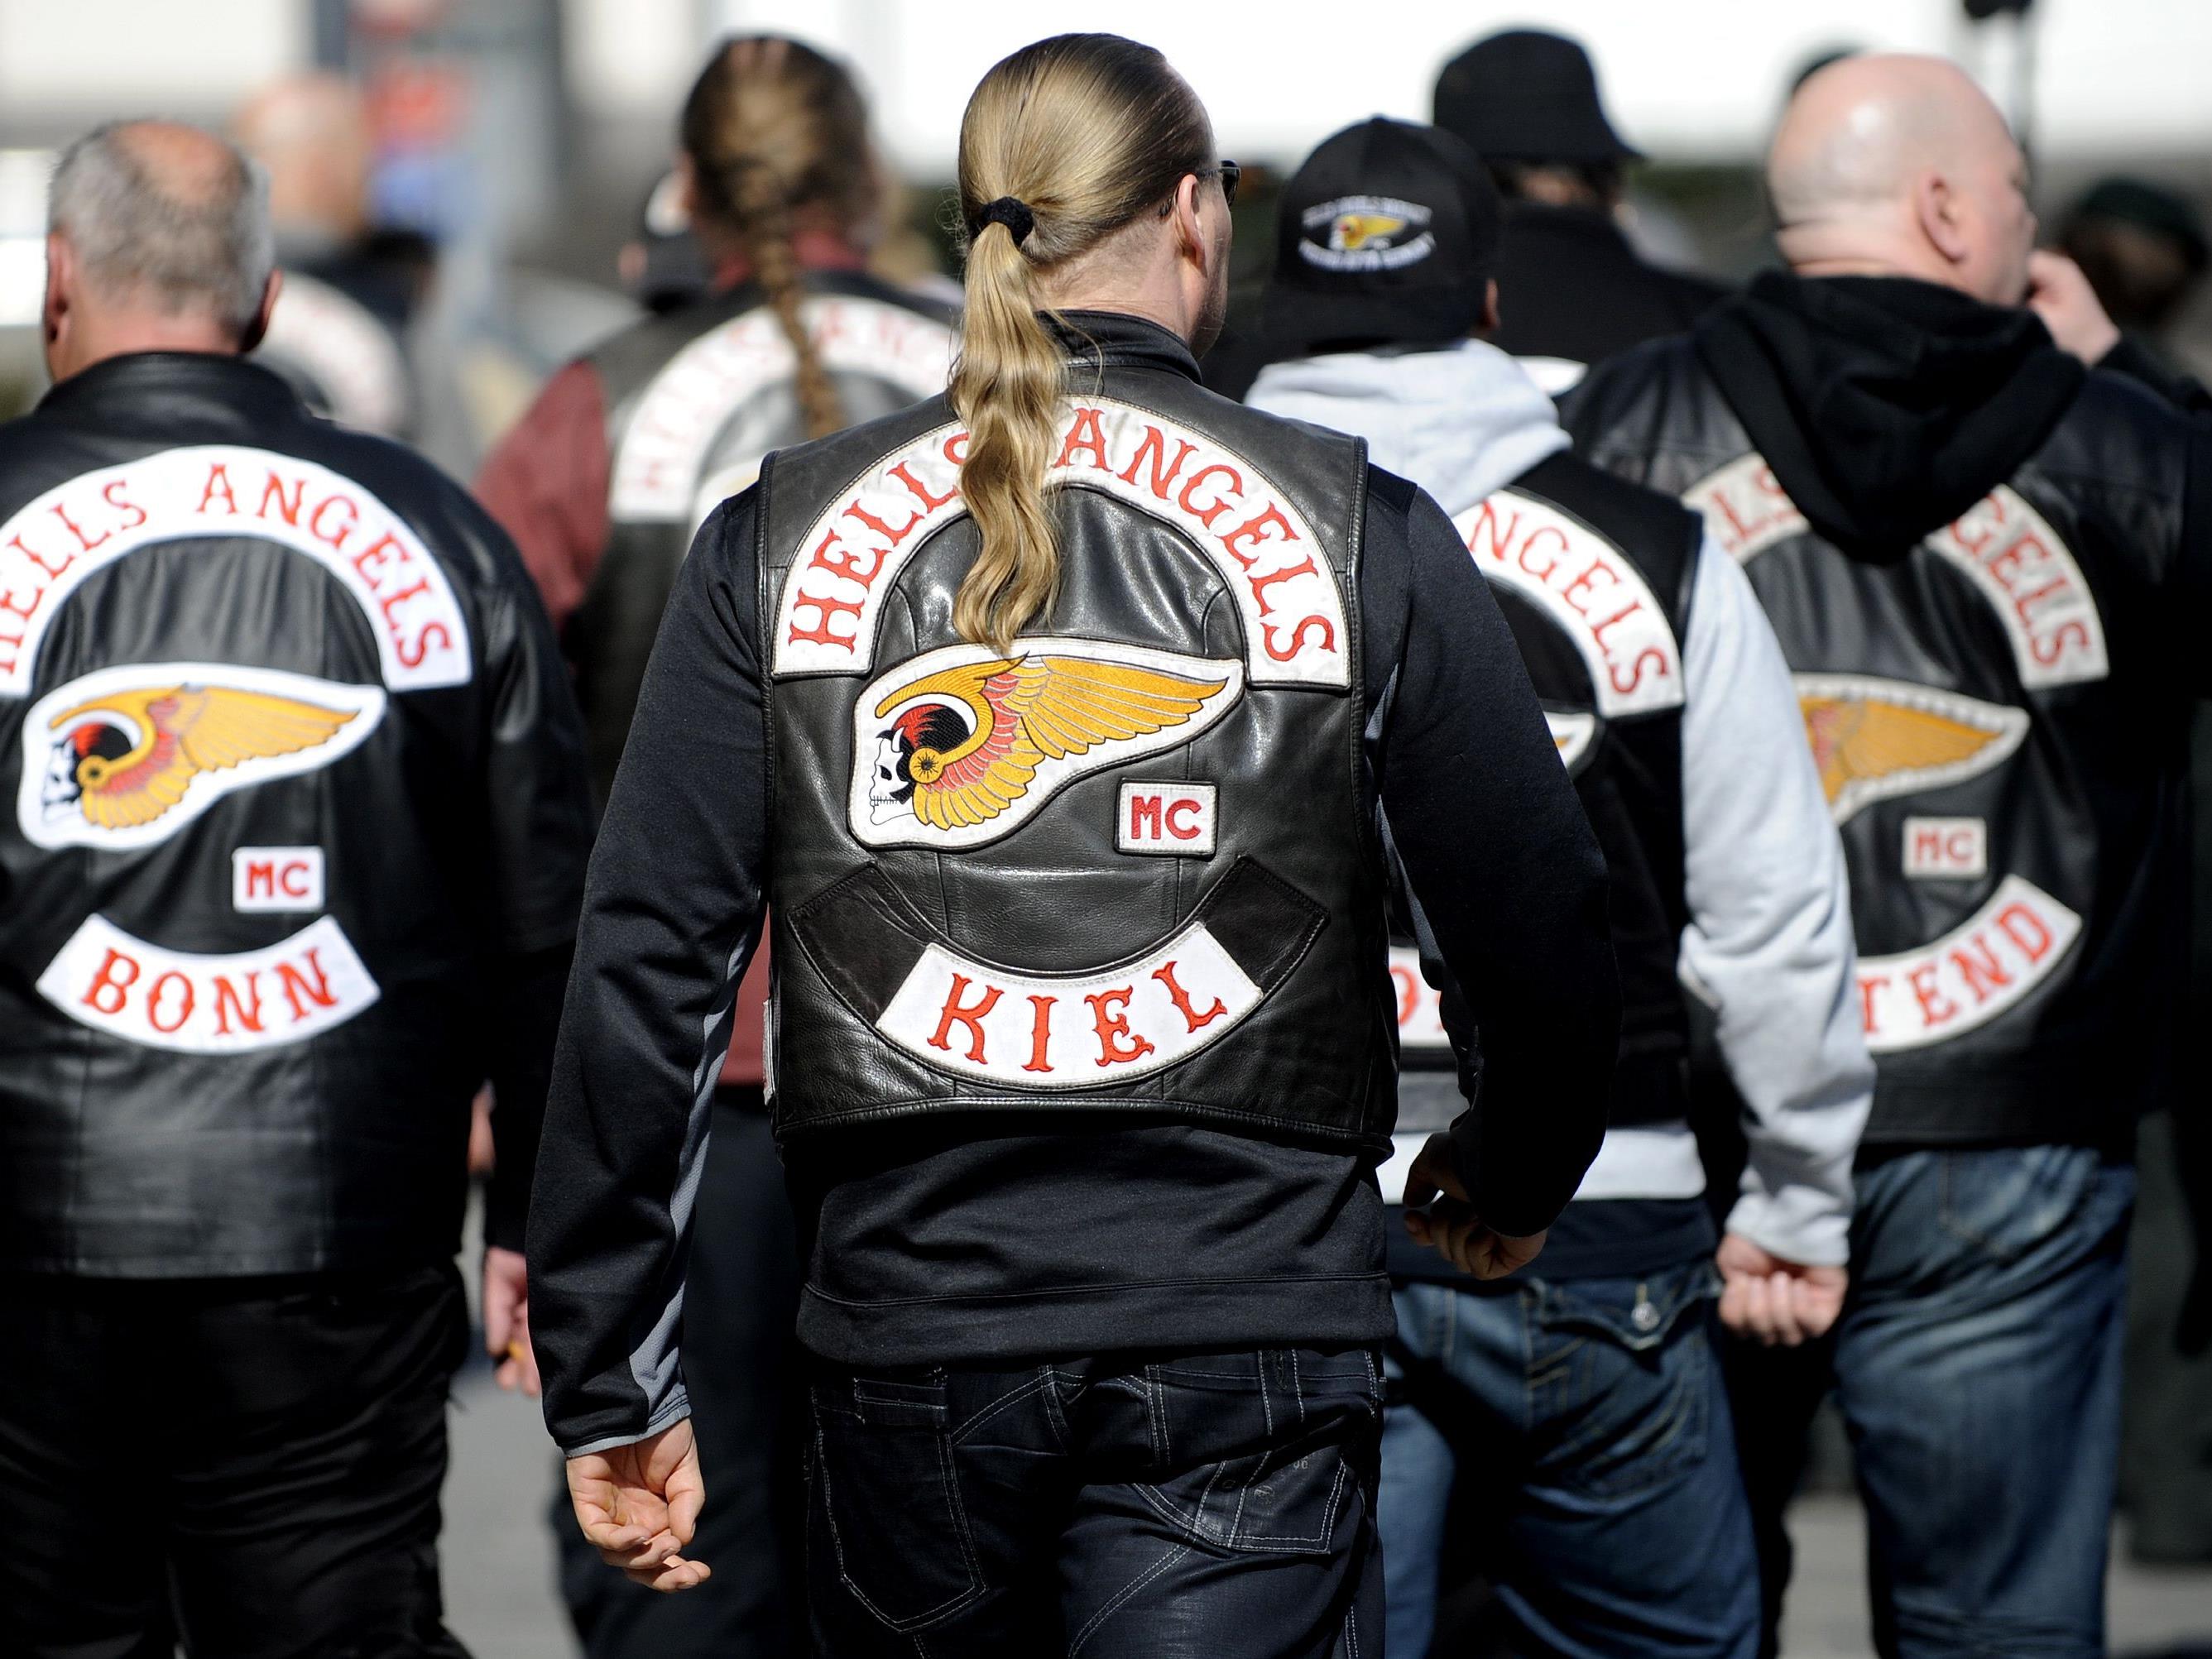 Wohl kein reiner "Motorradclub" - Die Hells Angels randalierten.